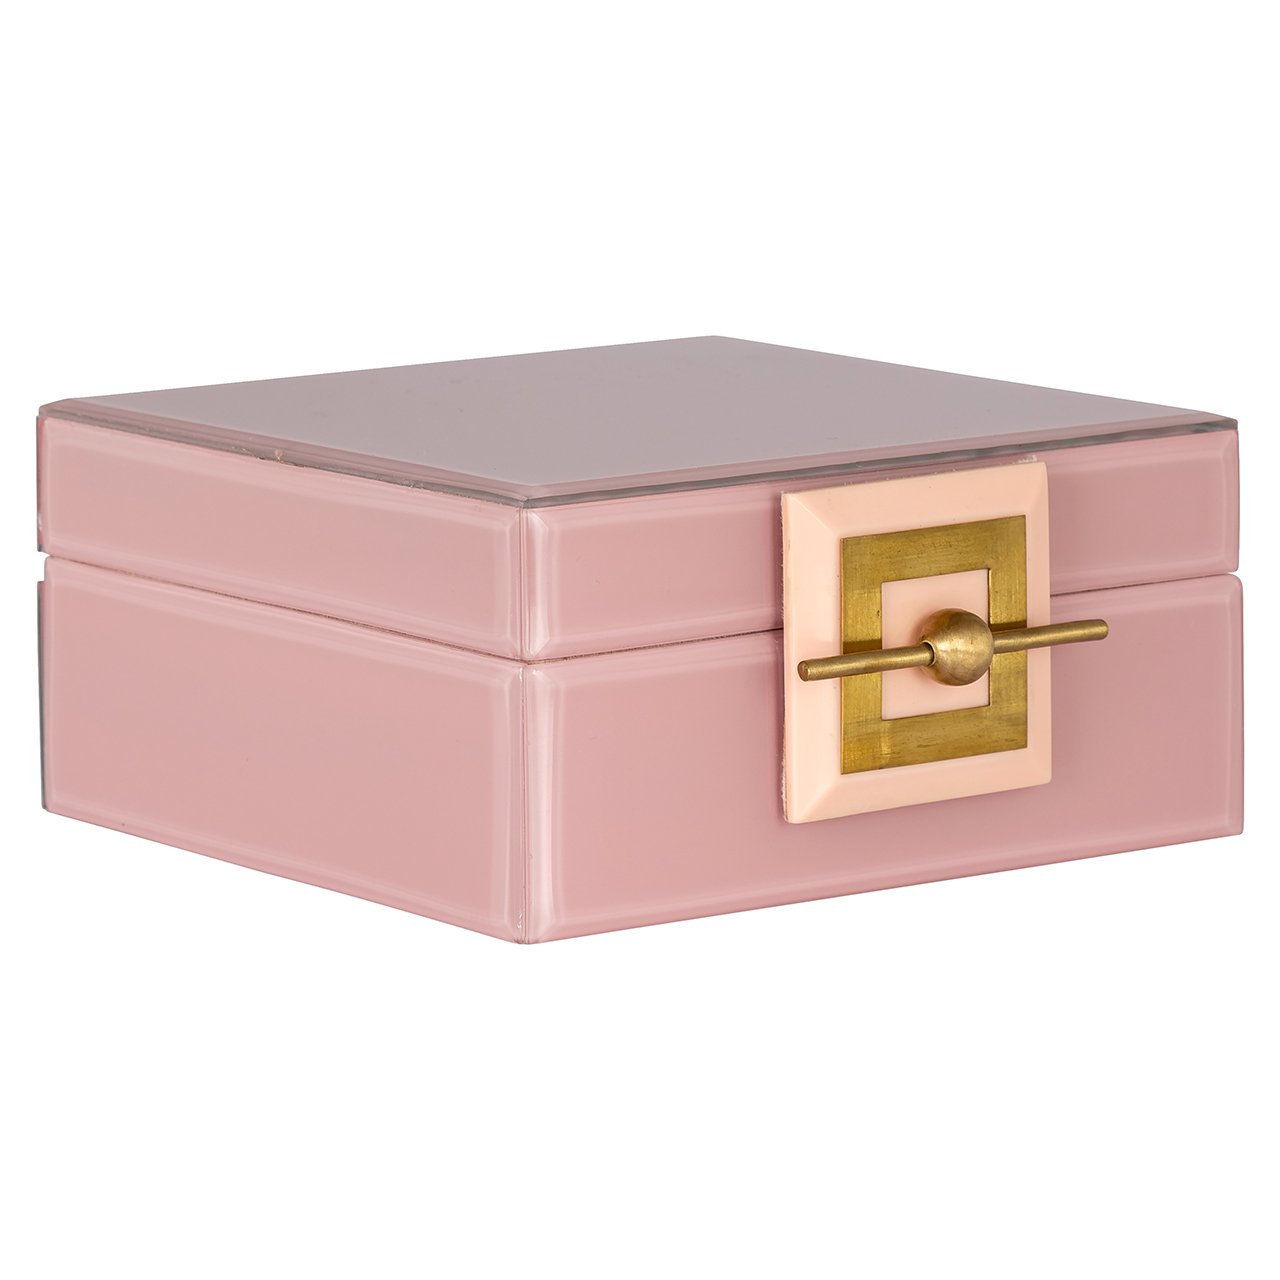 Richmond Interiors Juwelen box Bodine roze klein